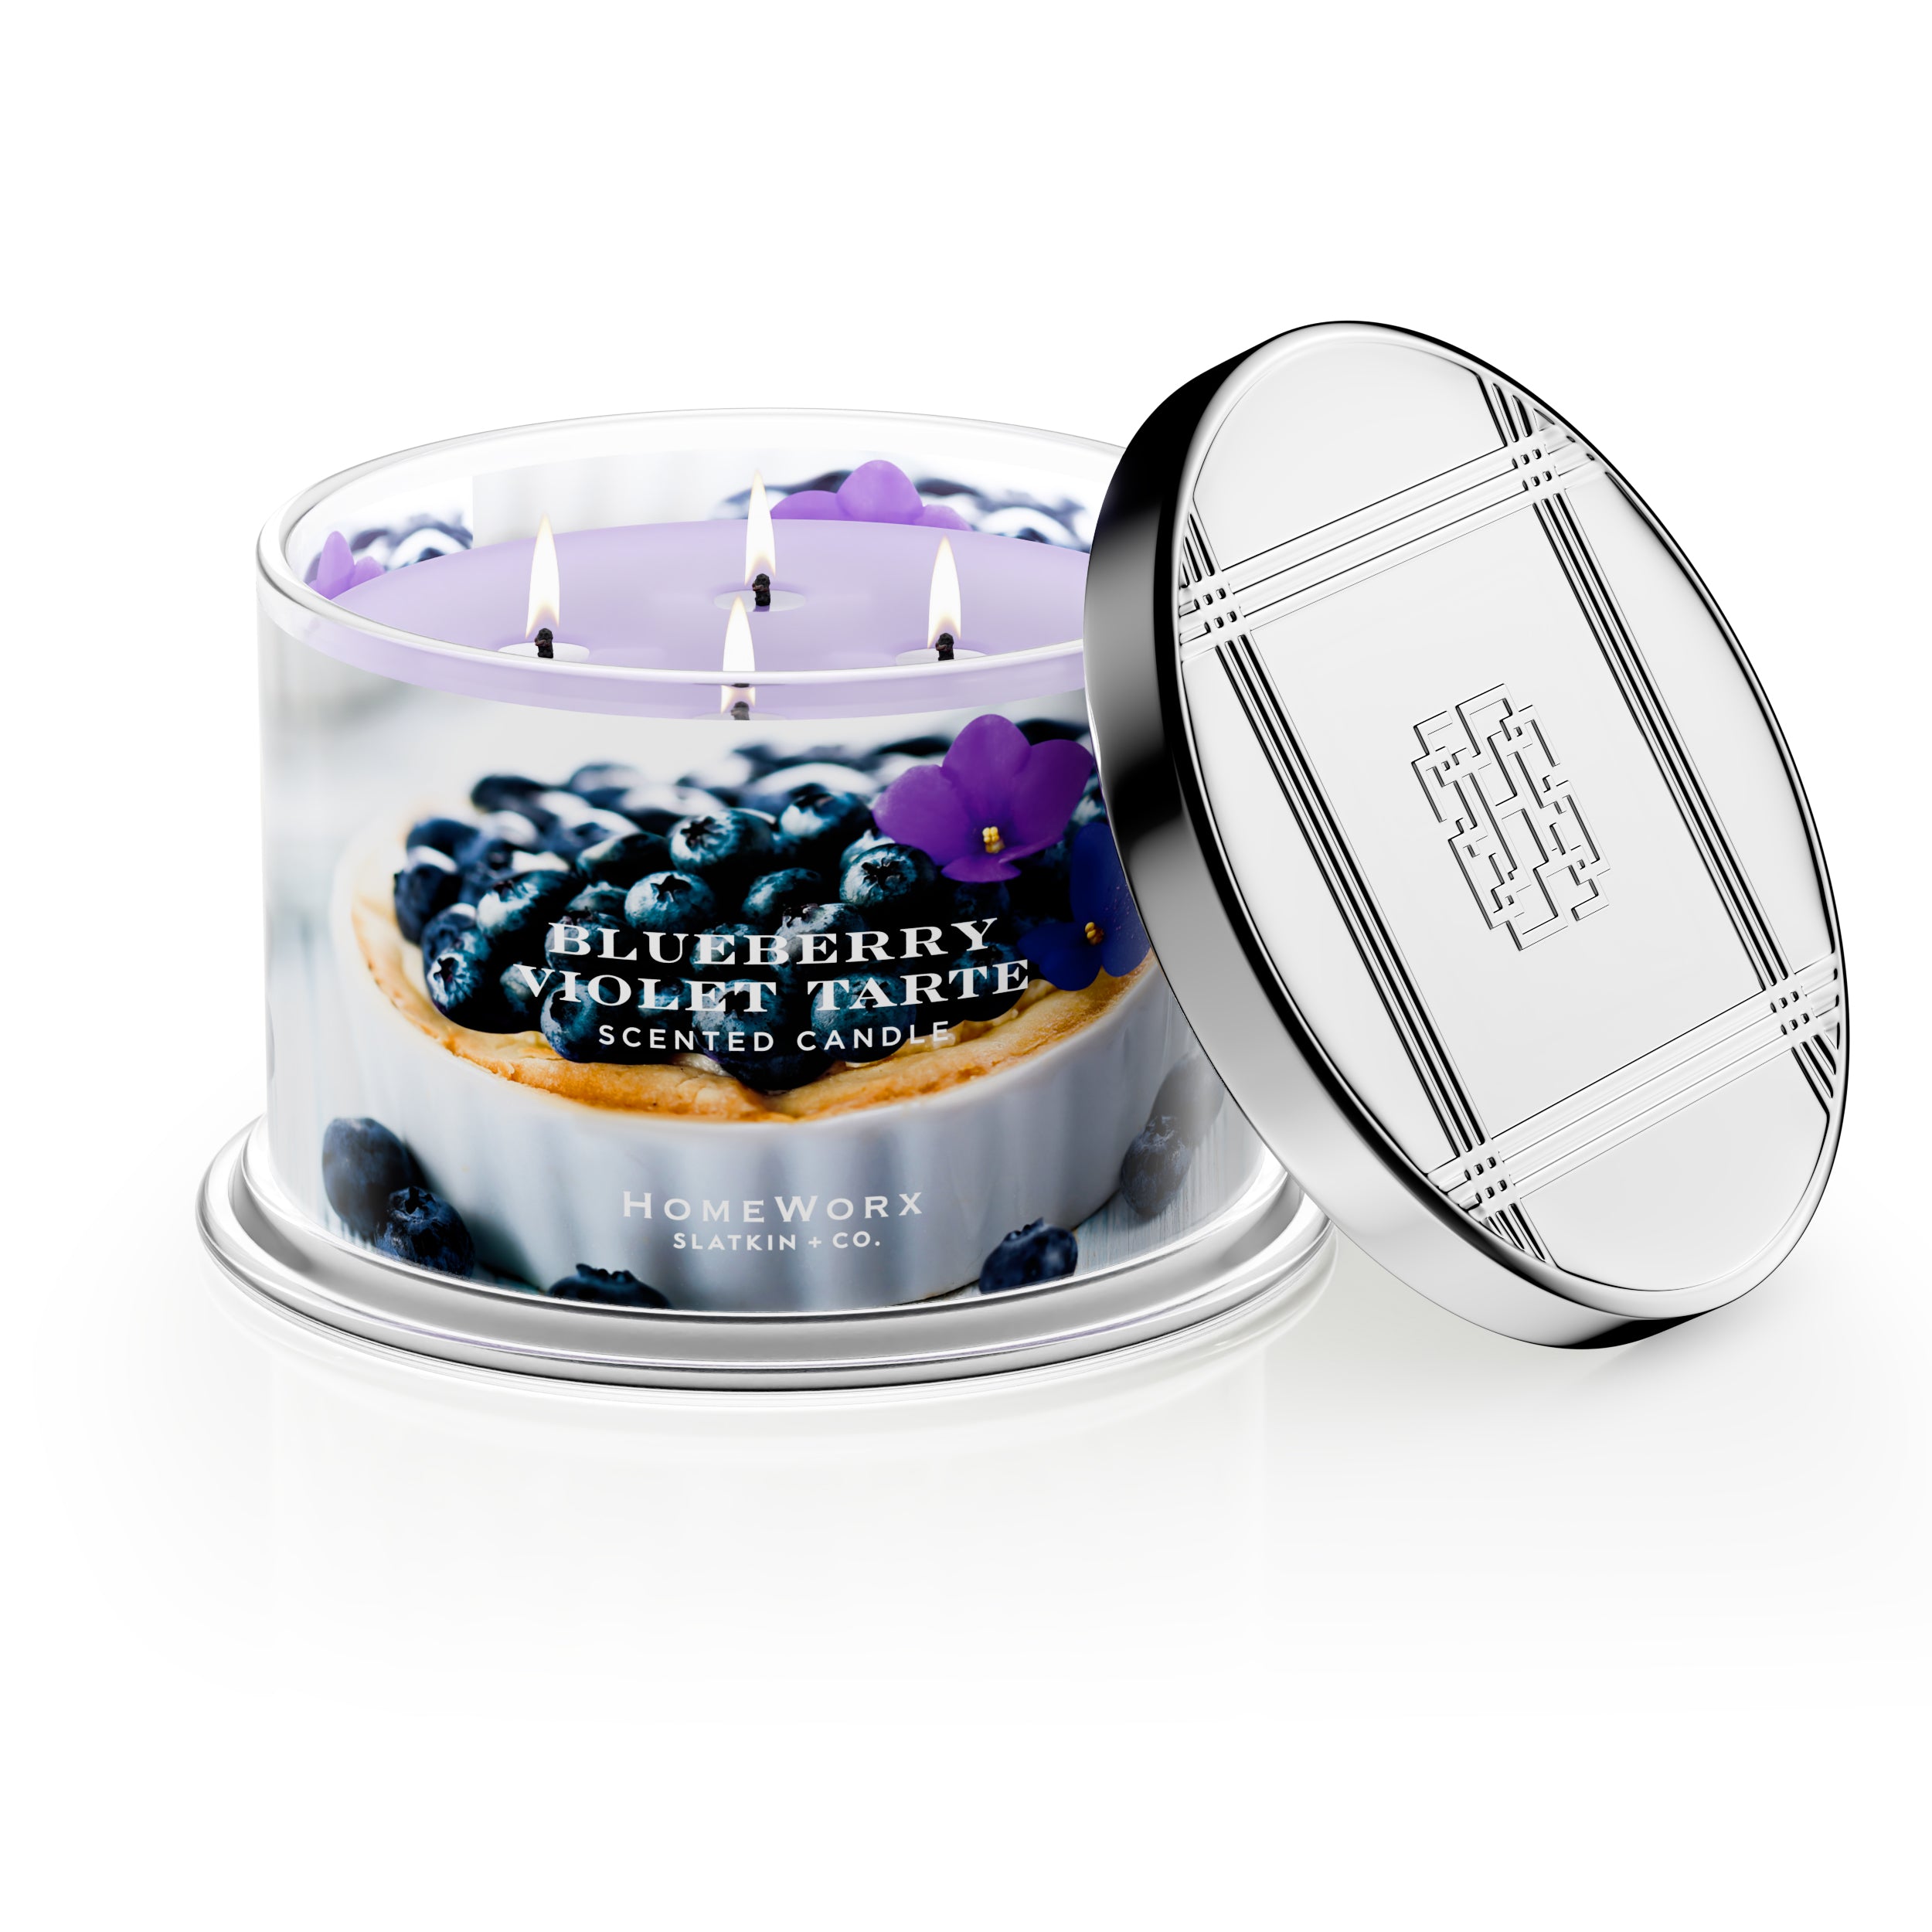 Blueberry Violet Tarte Candle